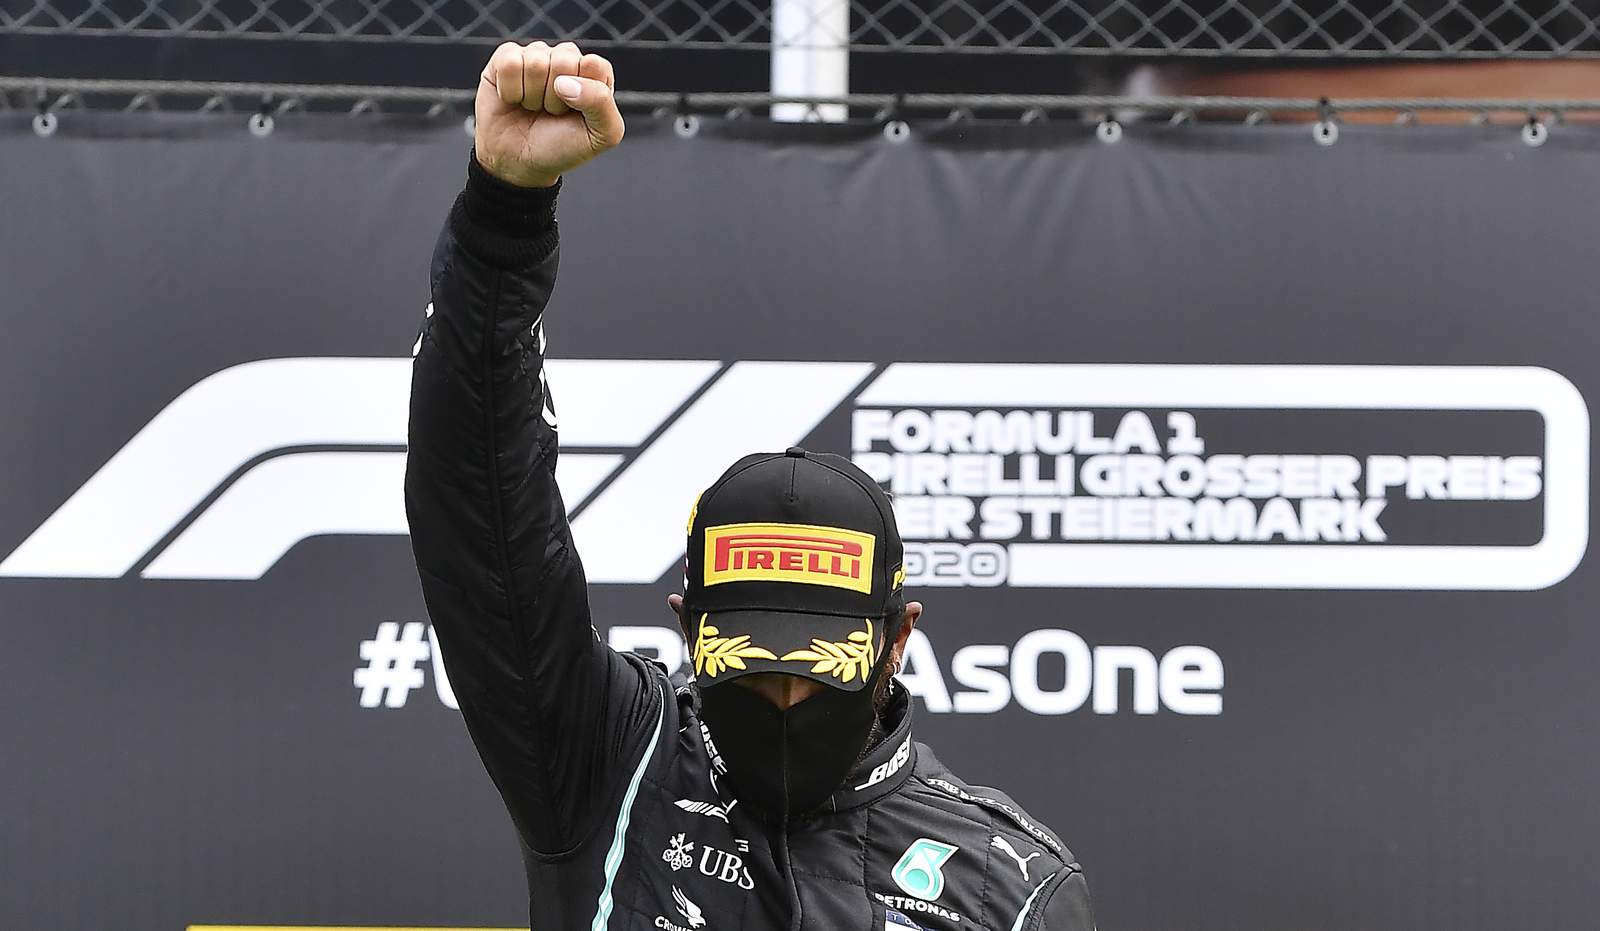 F1 star Hamilton raises right fist in fight against racism